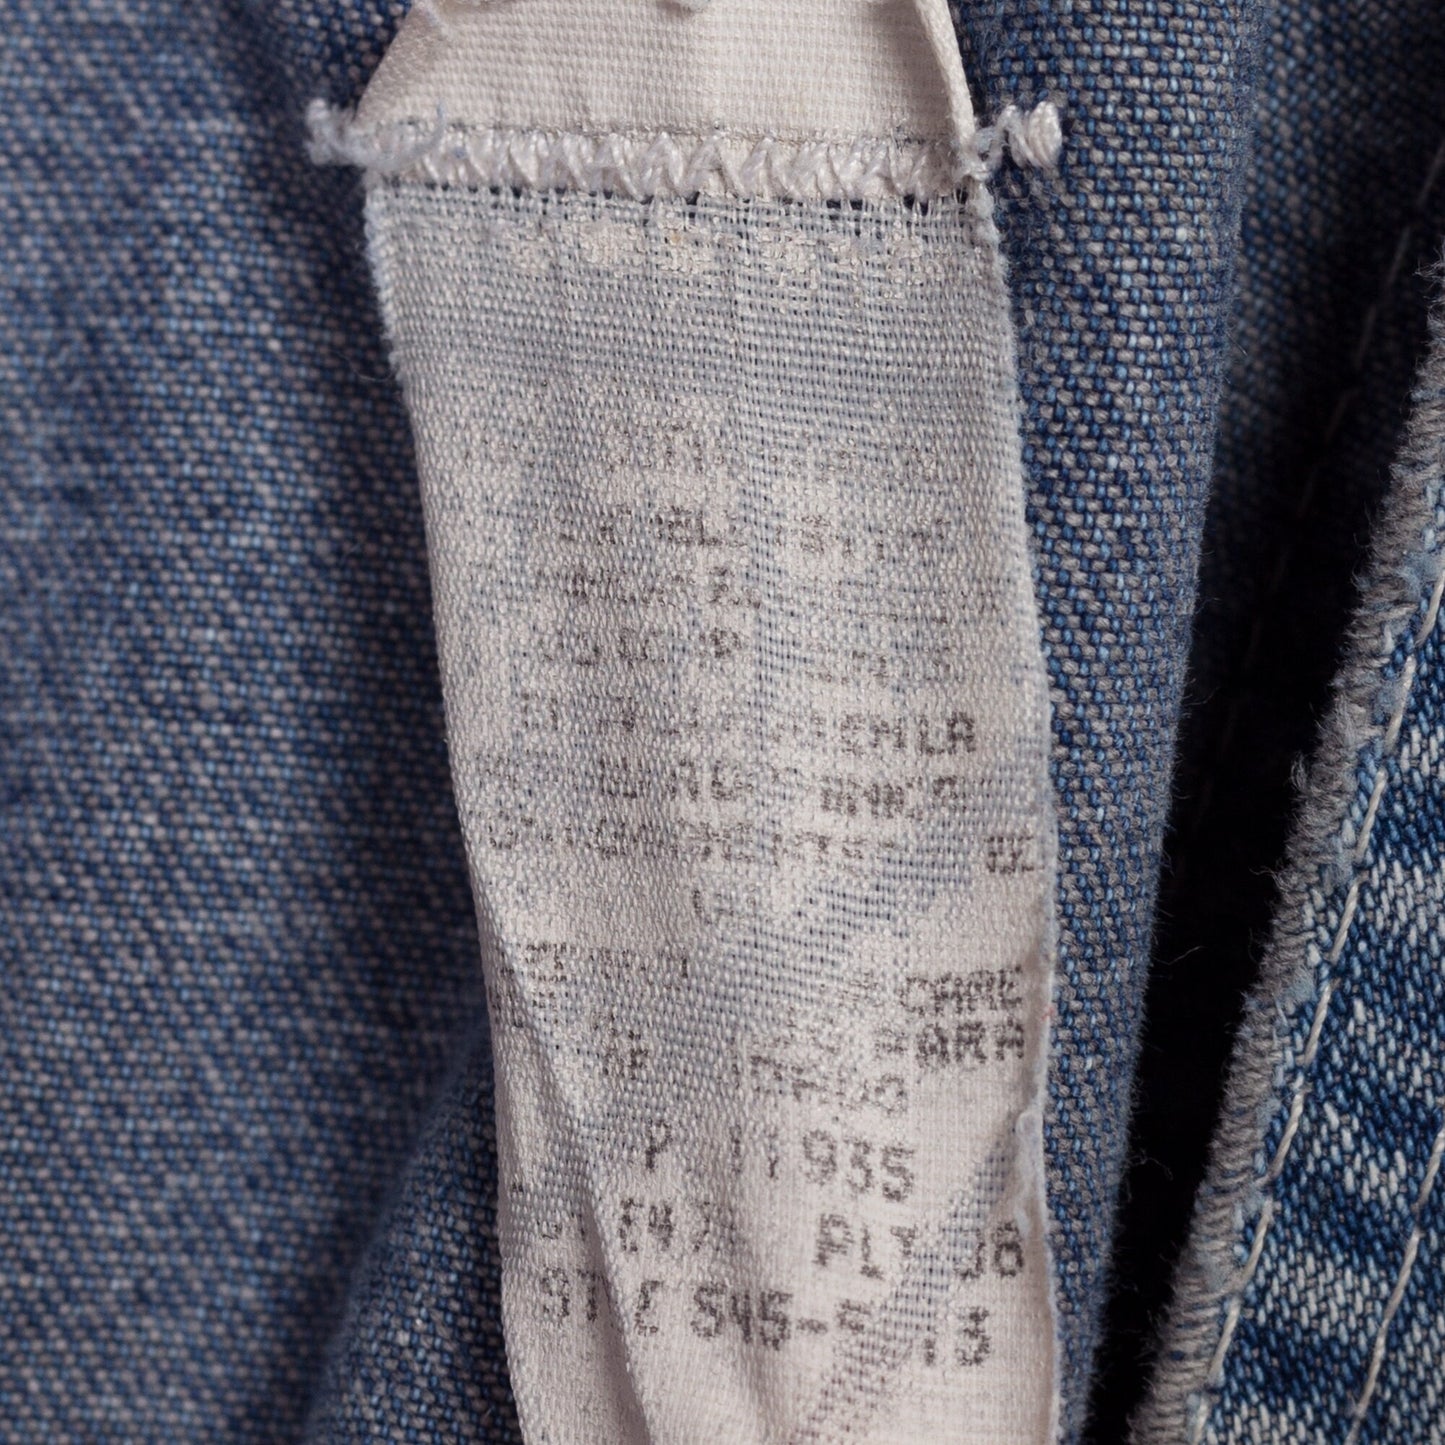 Vintage Big Mac Distressed Patchwork Overalls - 41x29 | 80s Square Bak Denim Overall Pants Blue Jean Workwear Dungarees